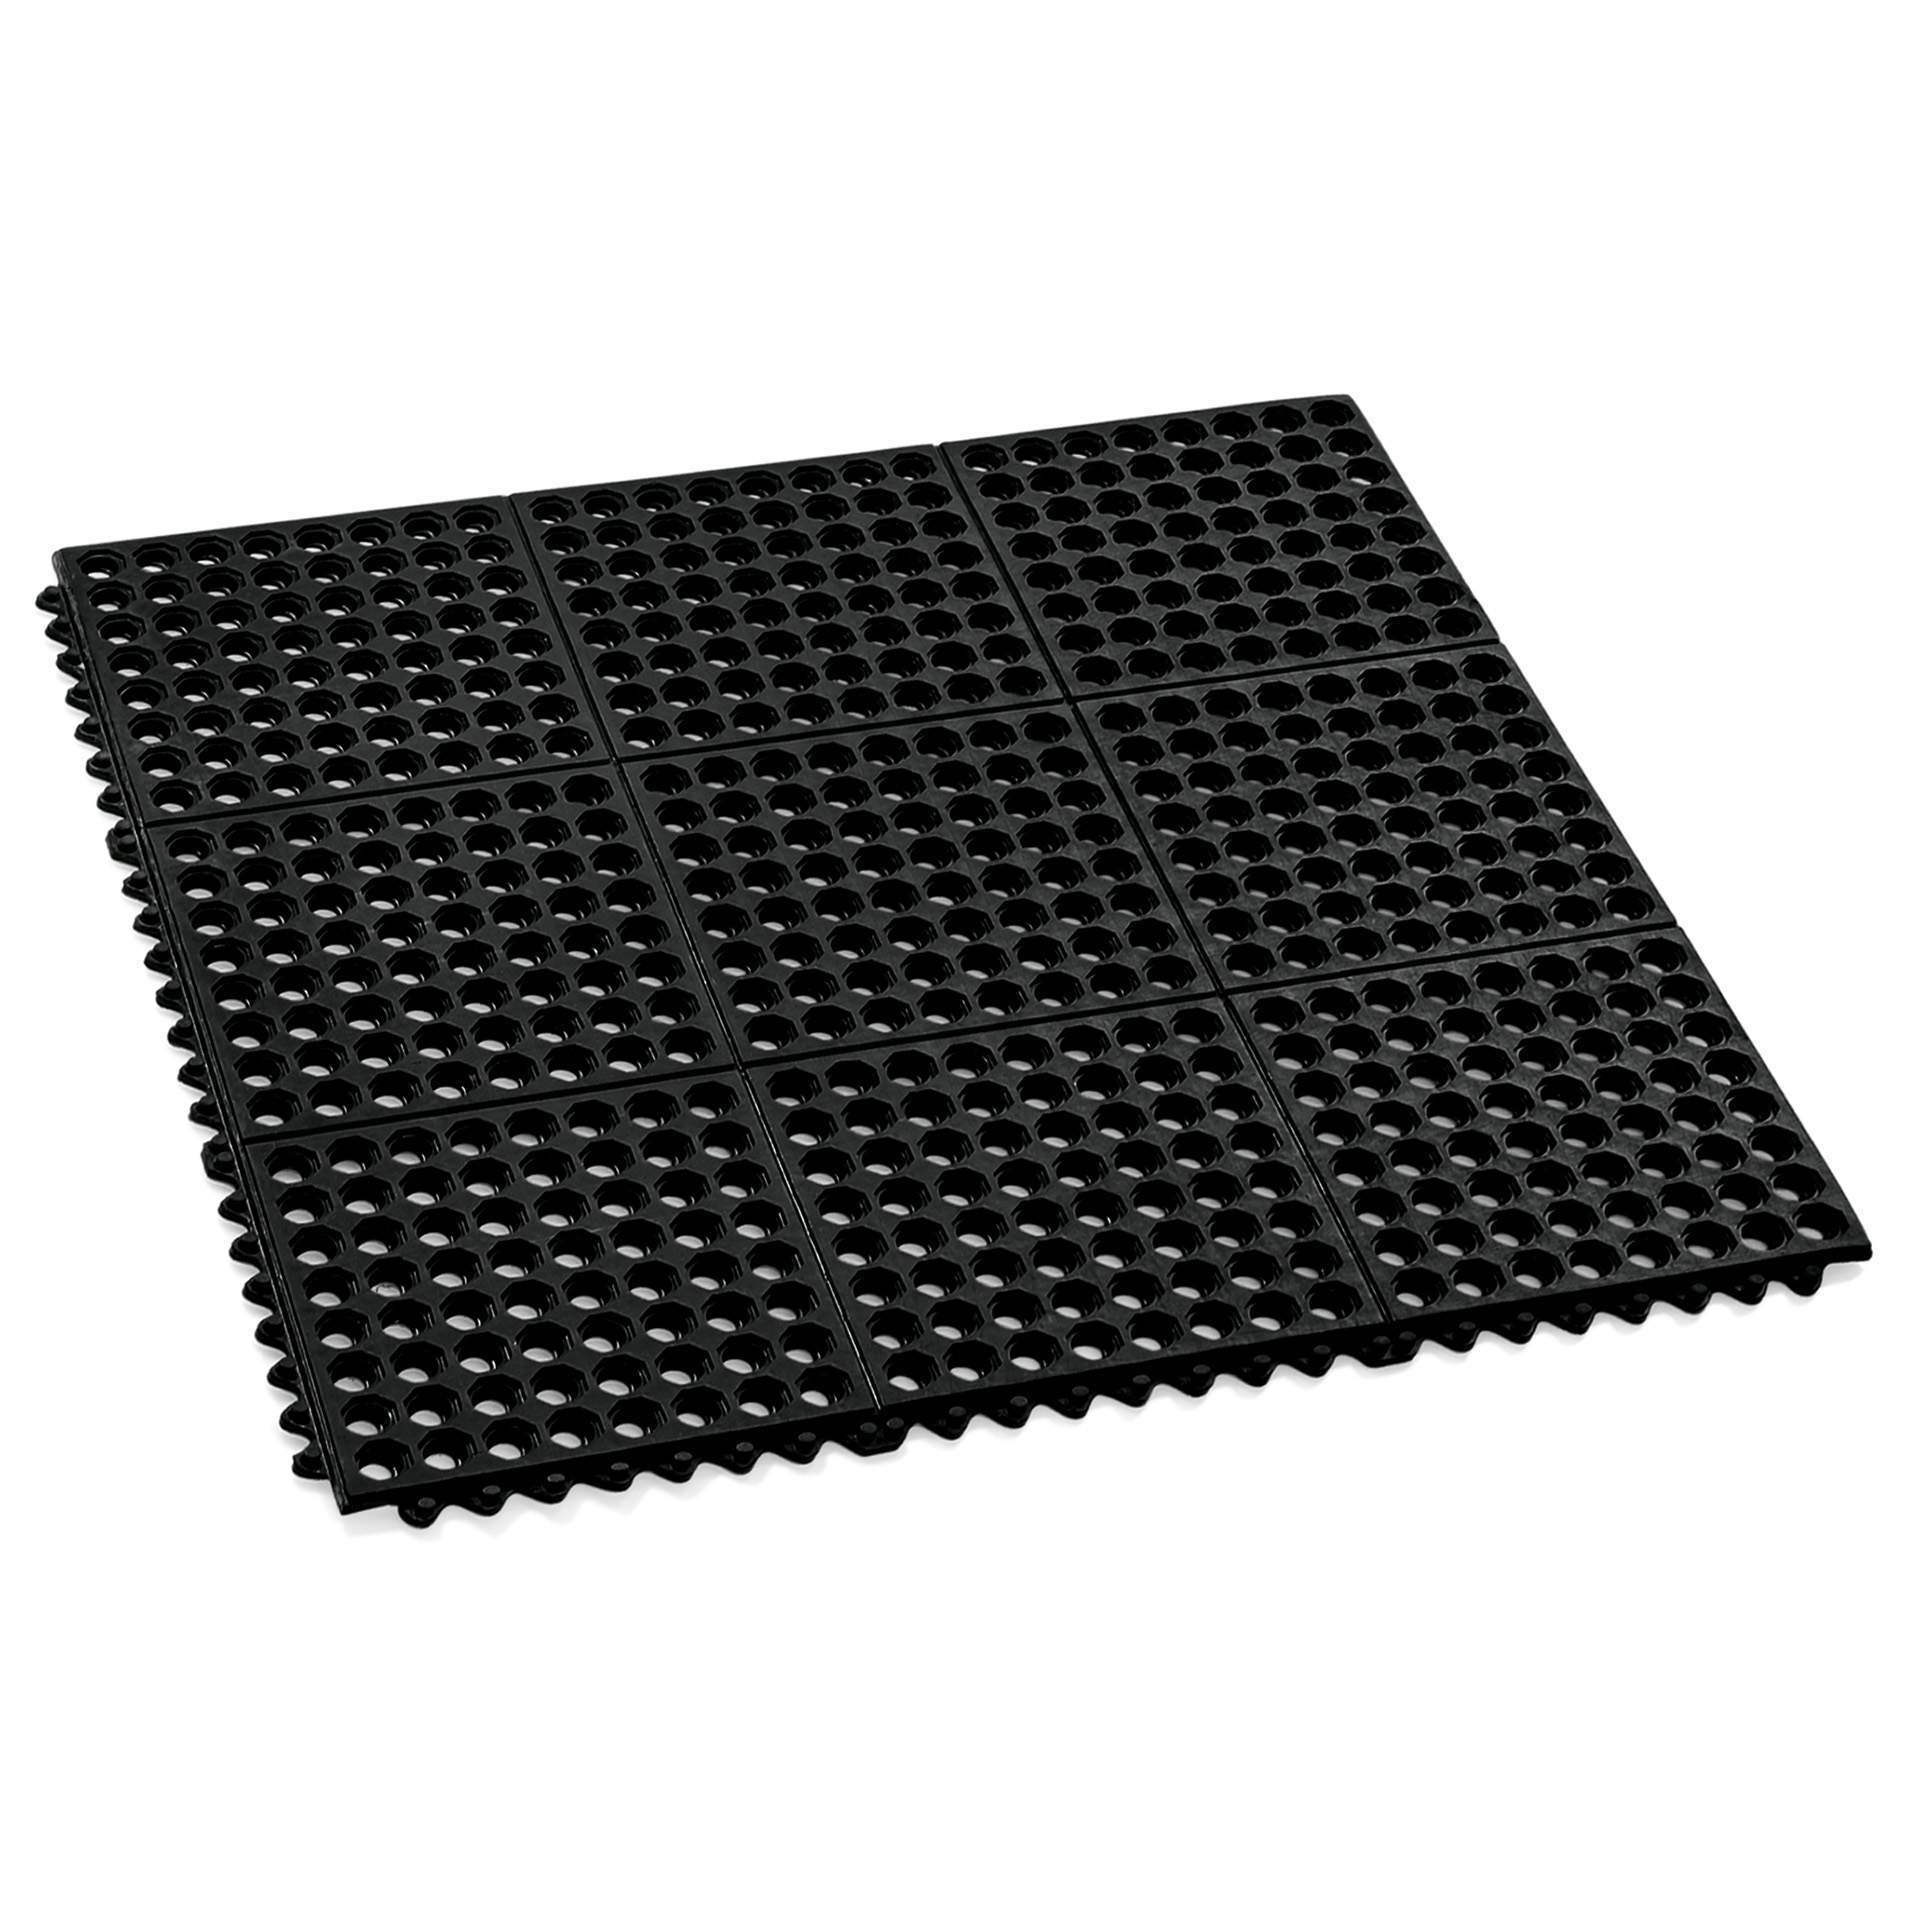 Fußbodenmatte - Klick-System - Abm. 91,5 x 91,5 x 1,2 cm - Gummi - 9982915-A